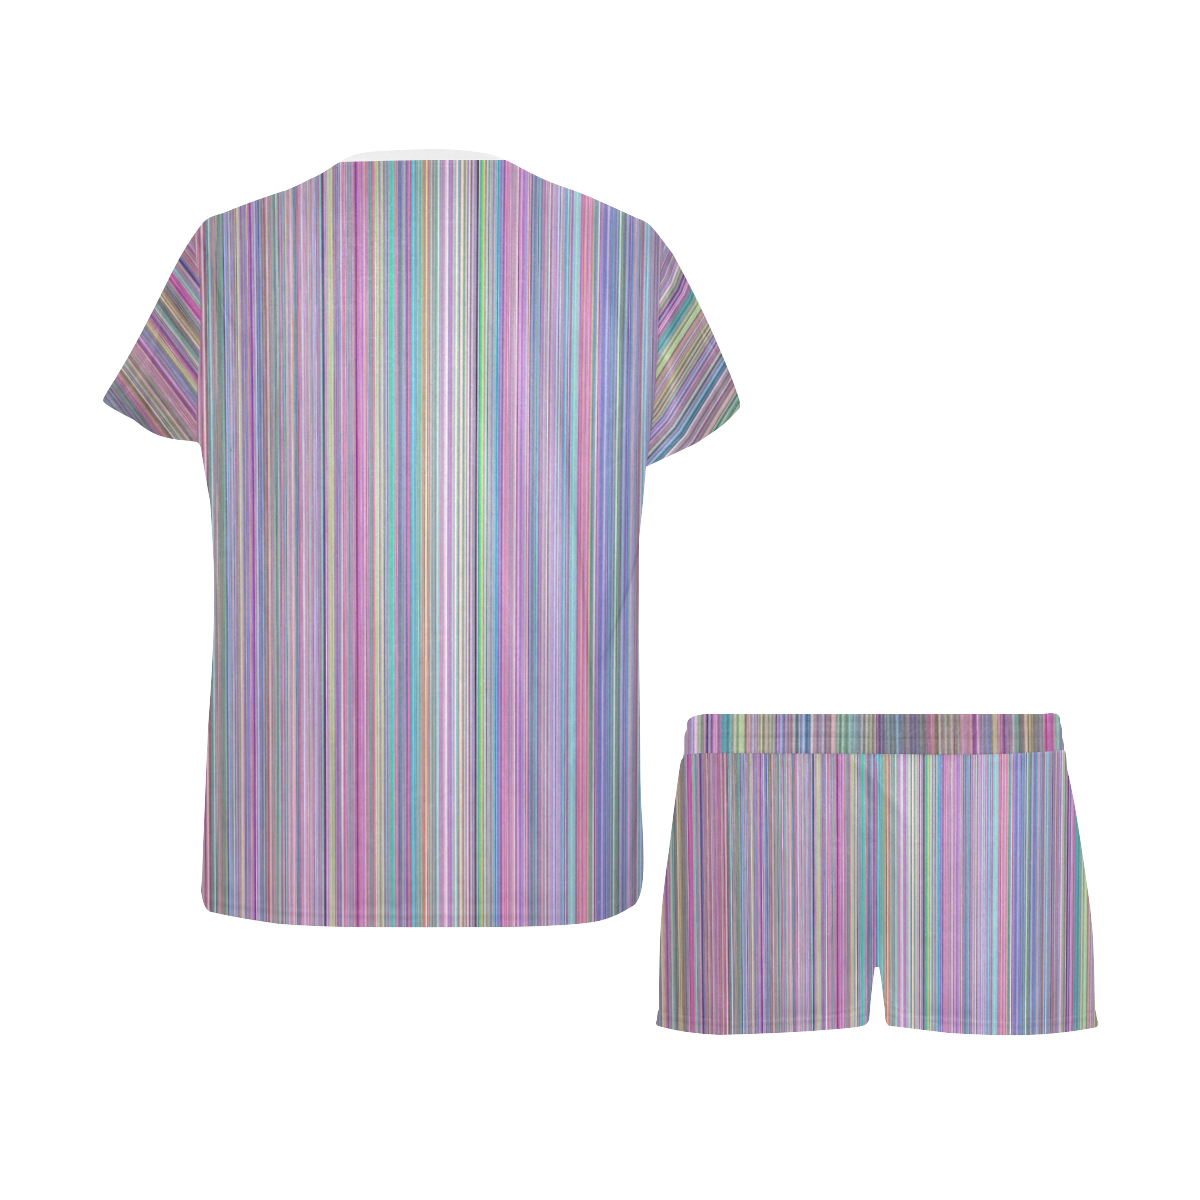 Broken TV screen rainbow stripe Women's Short Pajama Set